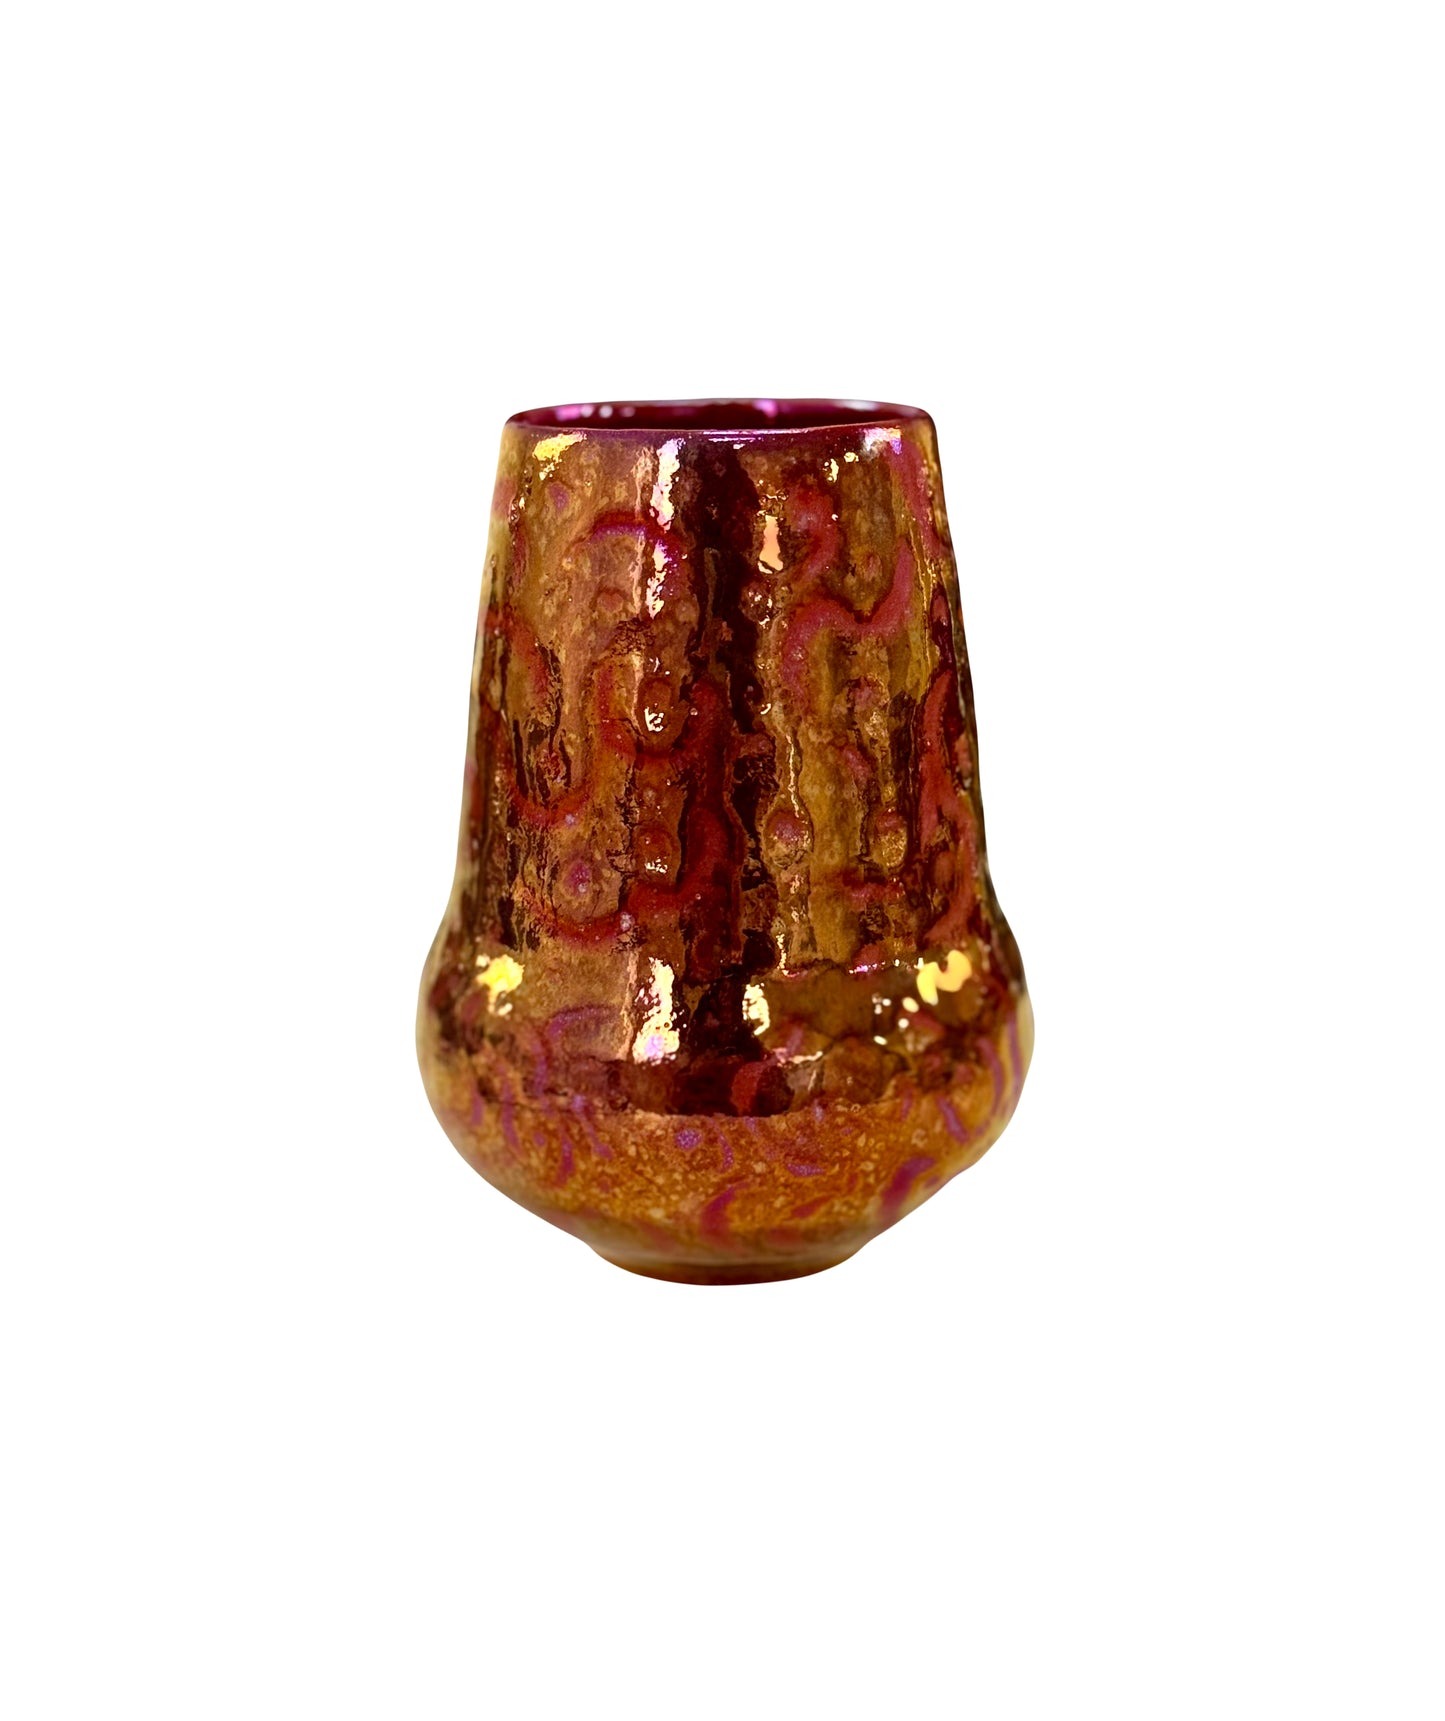 Copper Luster Glaze Vase with Sgraffito Design